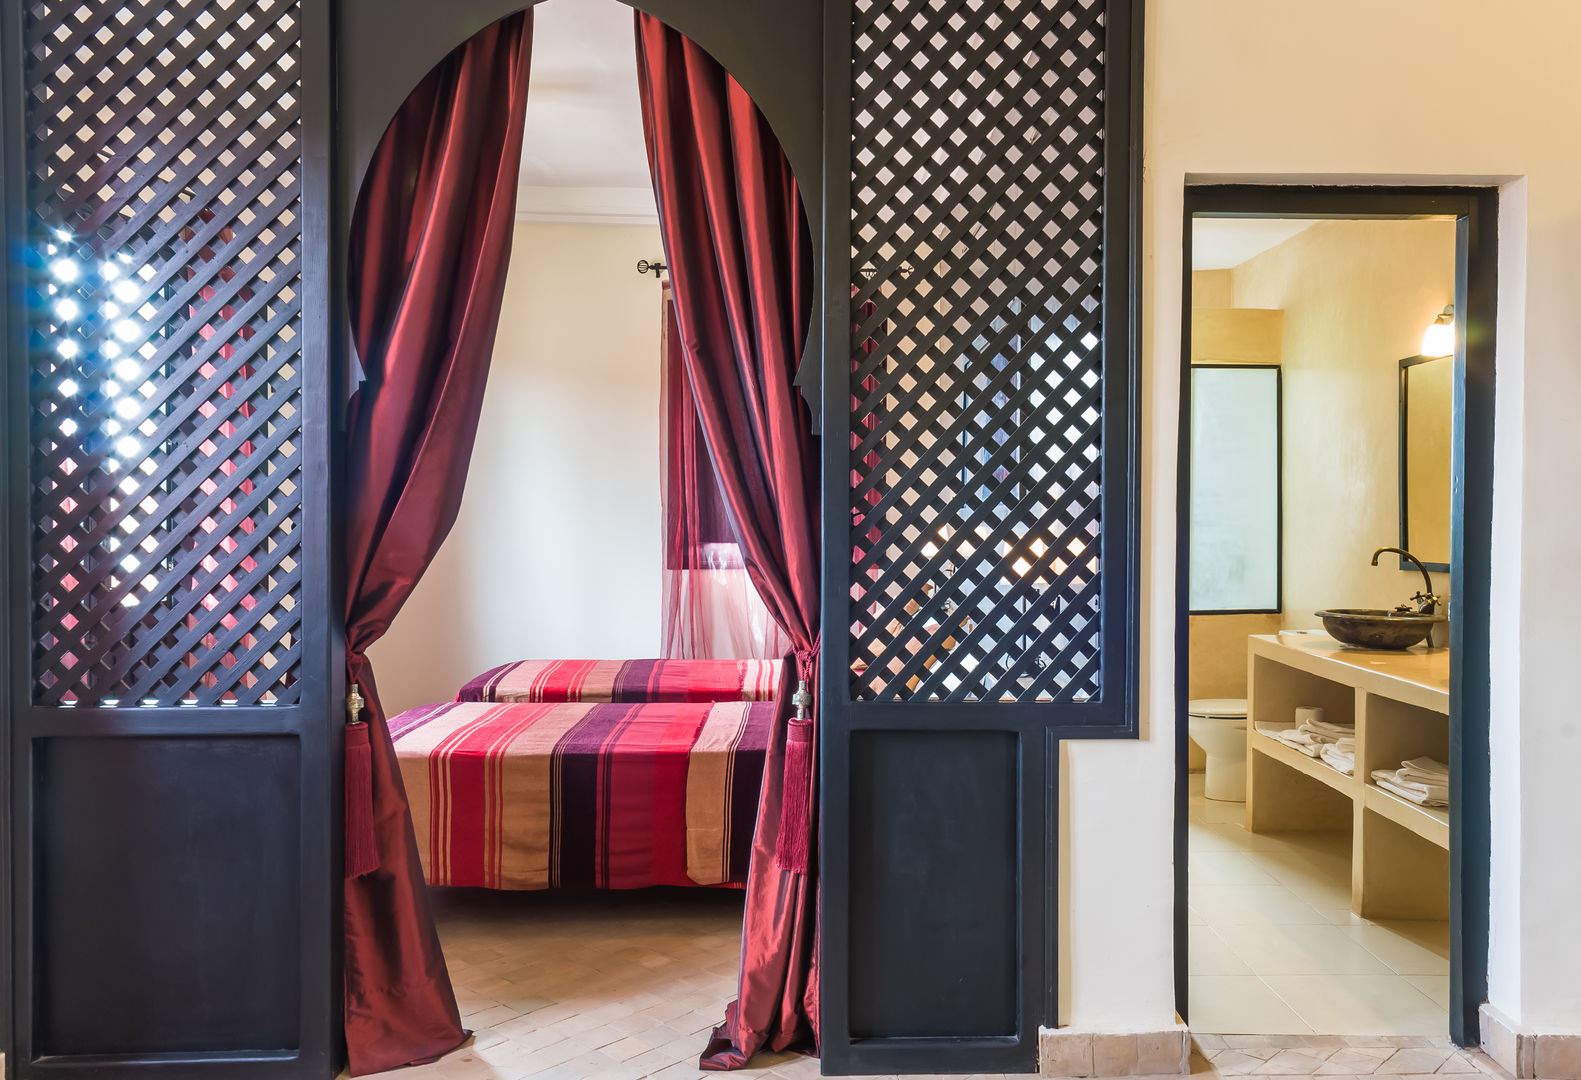 Hotel en Marruecos, Space Maker Studio Space Maker Studio Commercial spaces